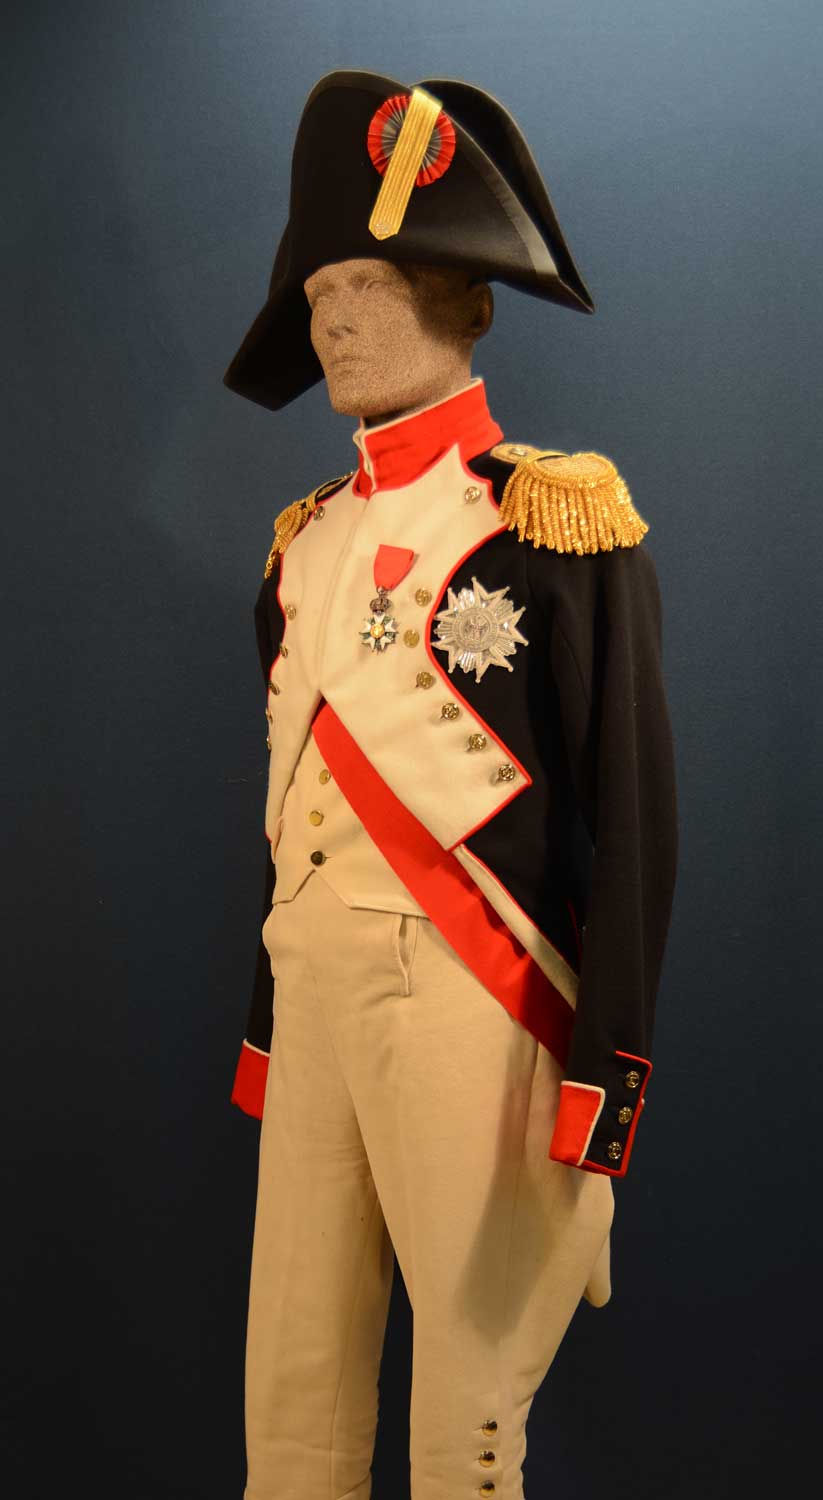 French, 21eme Ligne, Colonel